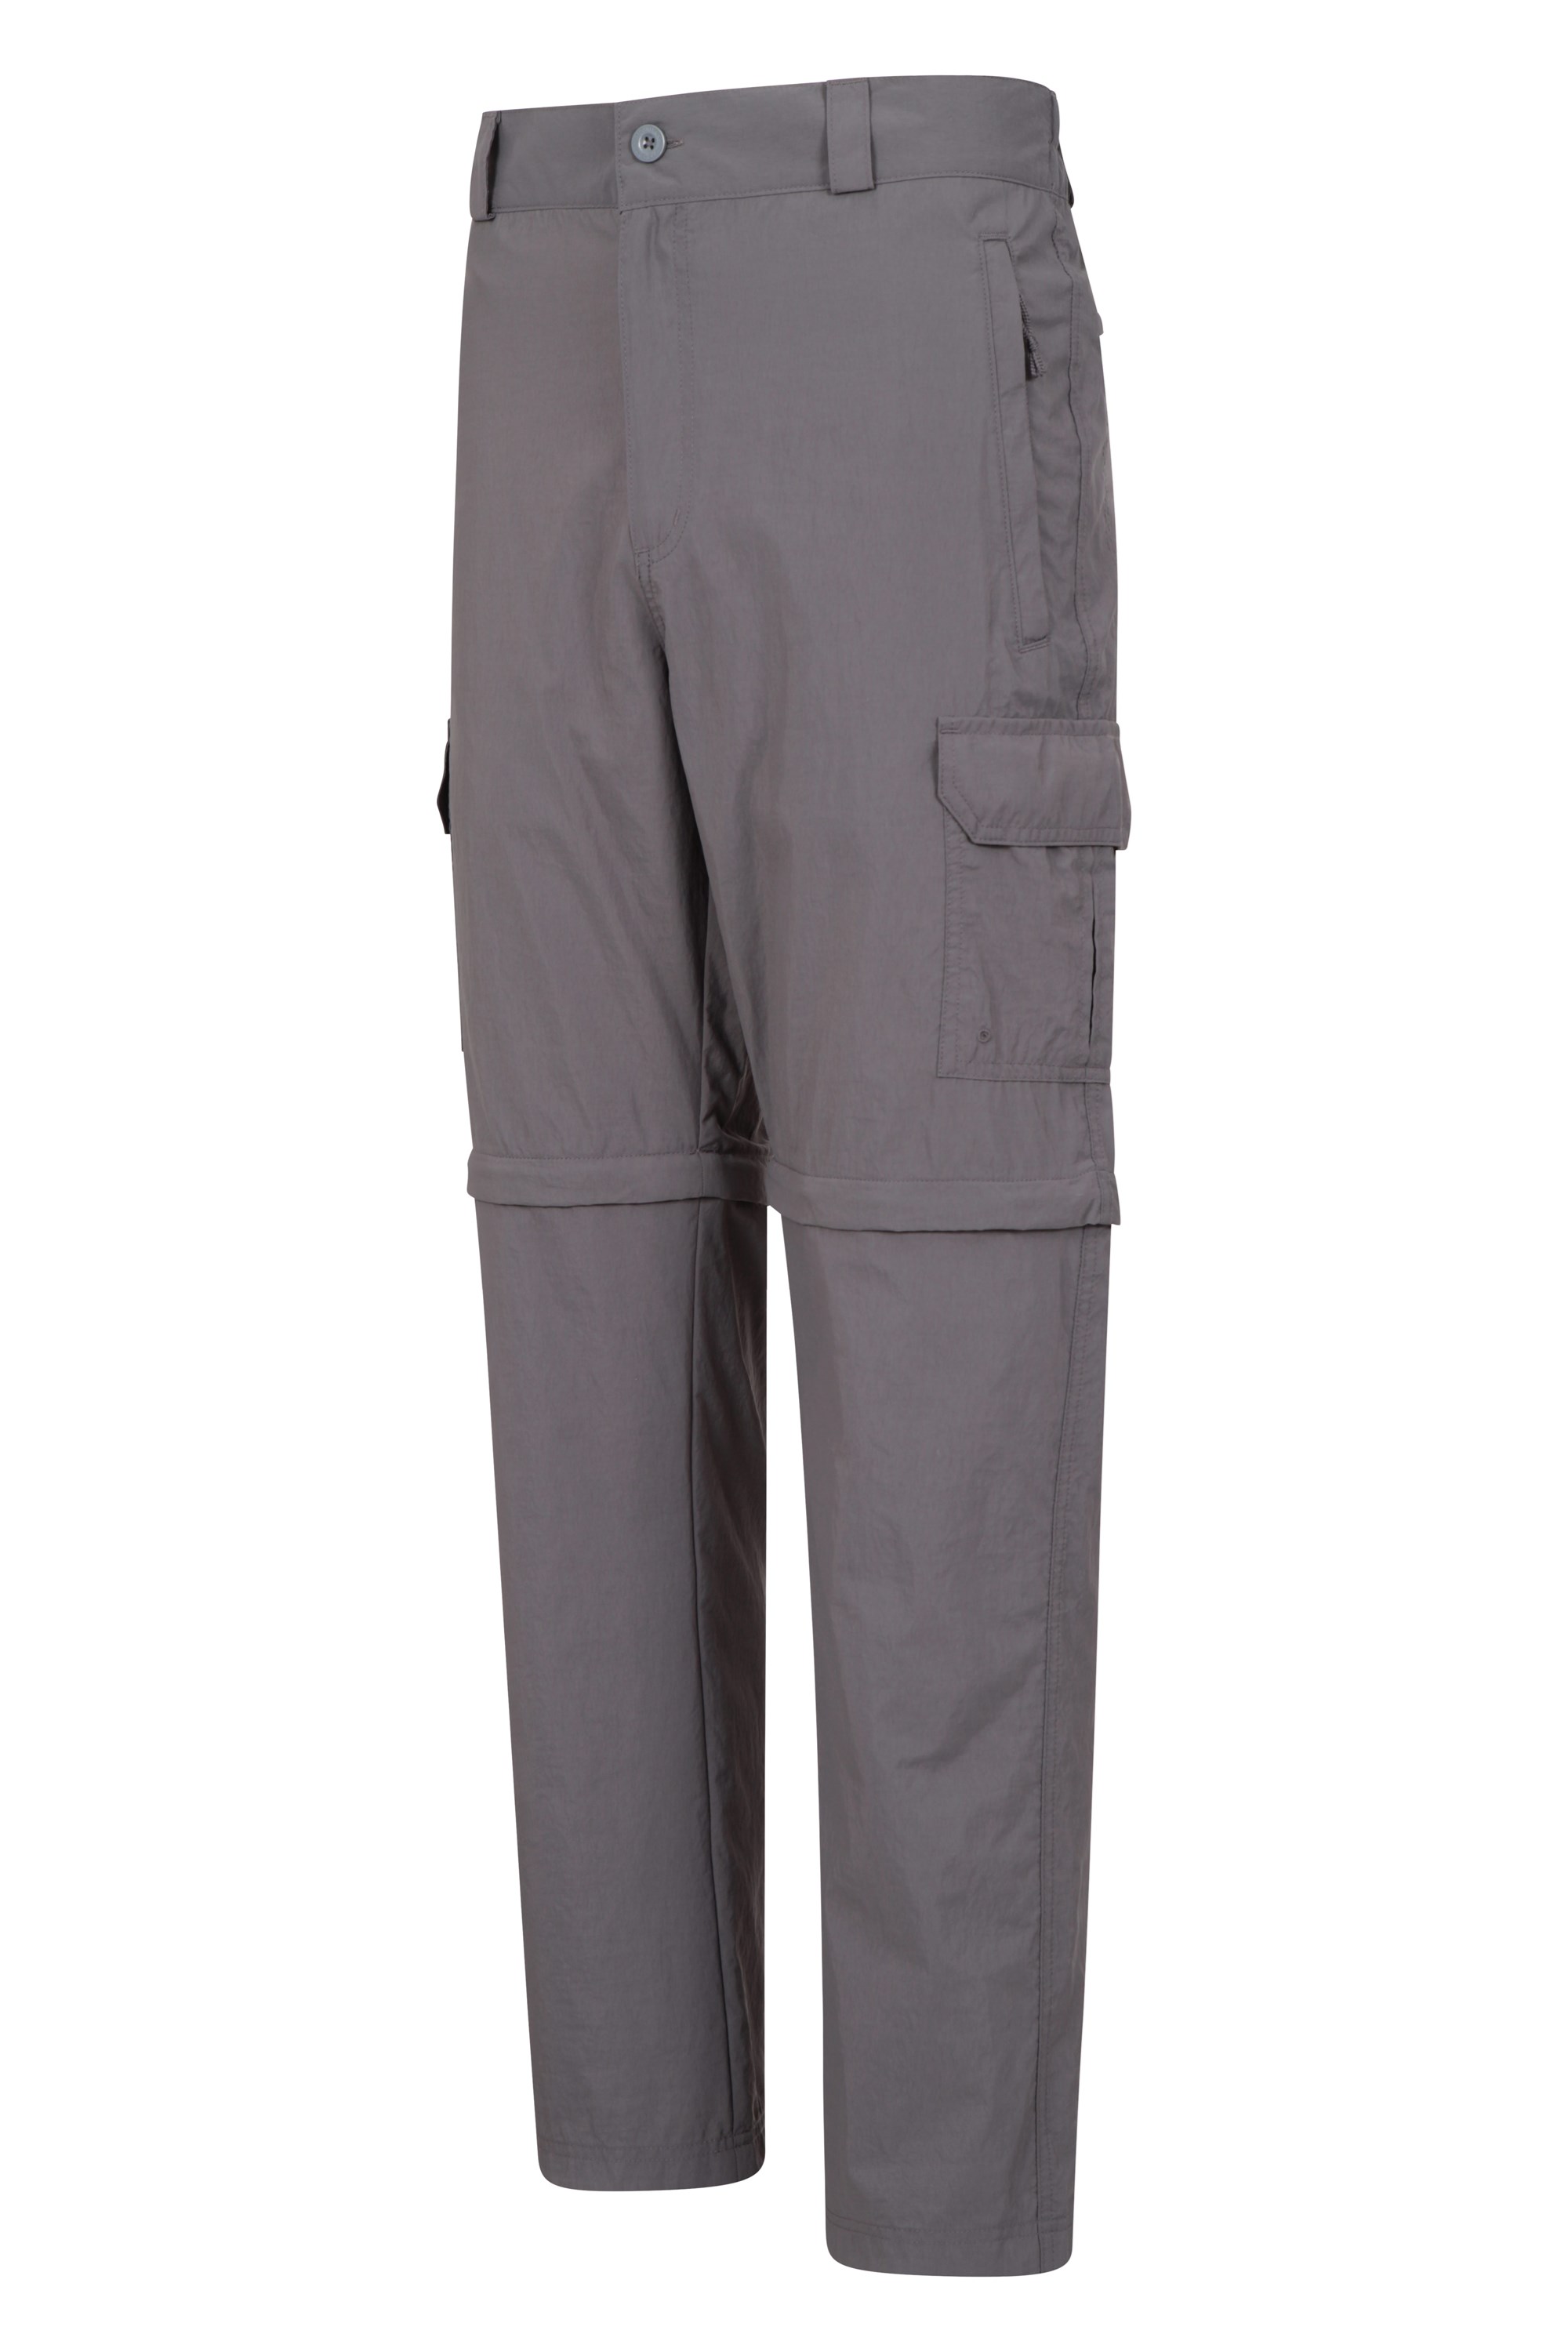 Mountain Warehouse Mountain Warehouse Mens Explore Convertible Trousers.UK 34 SHORT.RRP £59.99. 